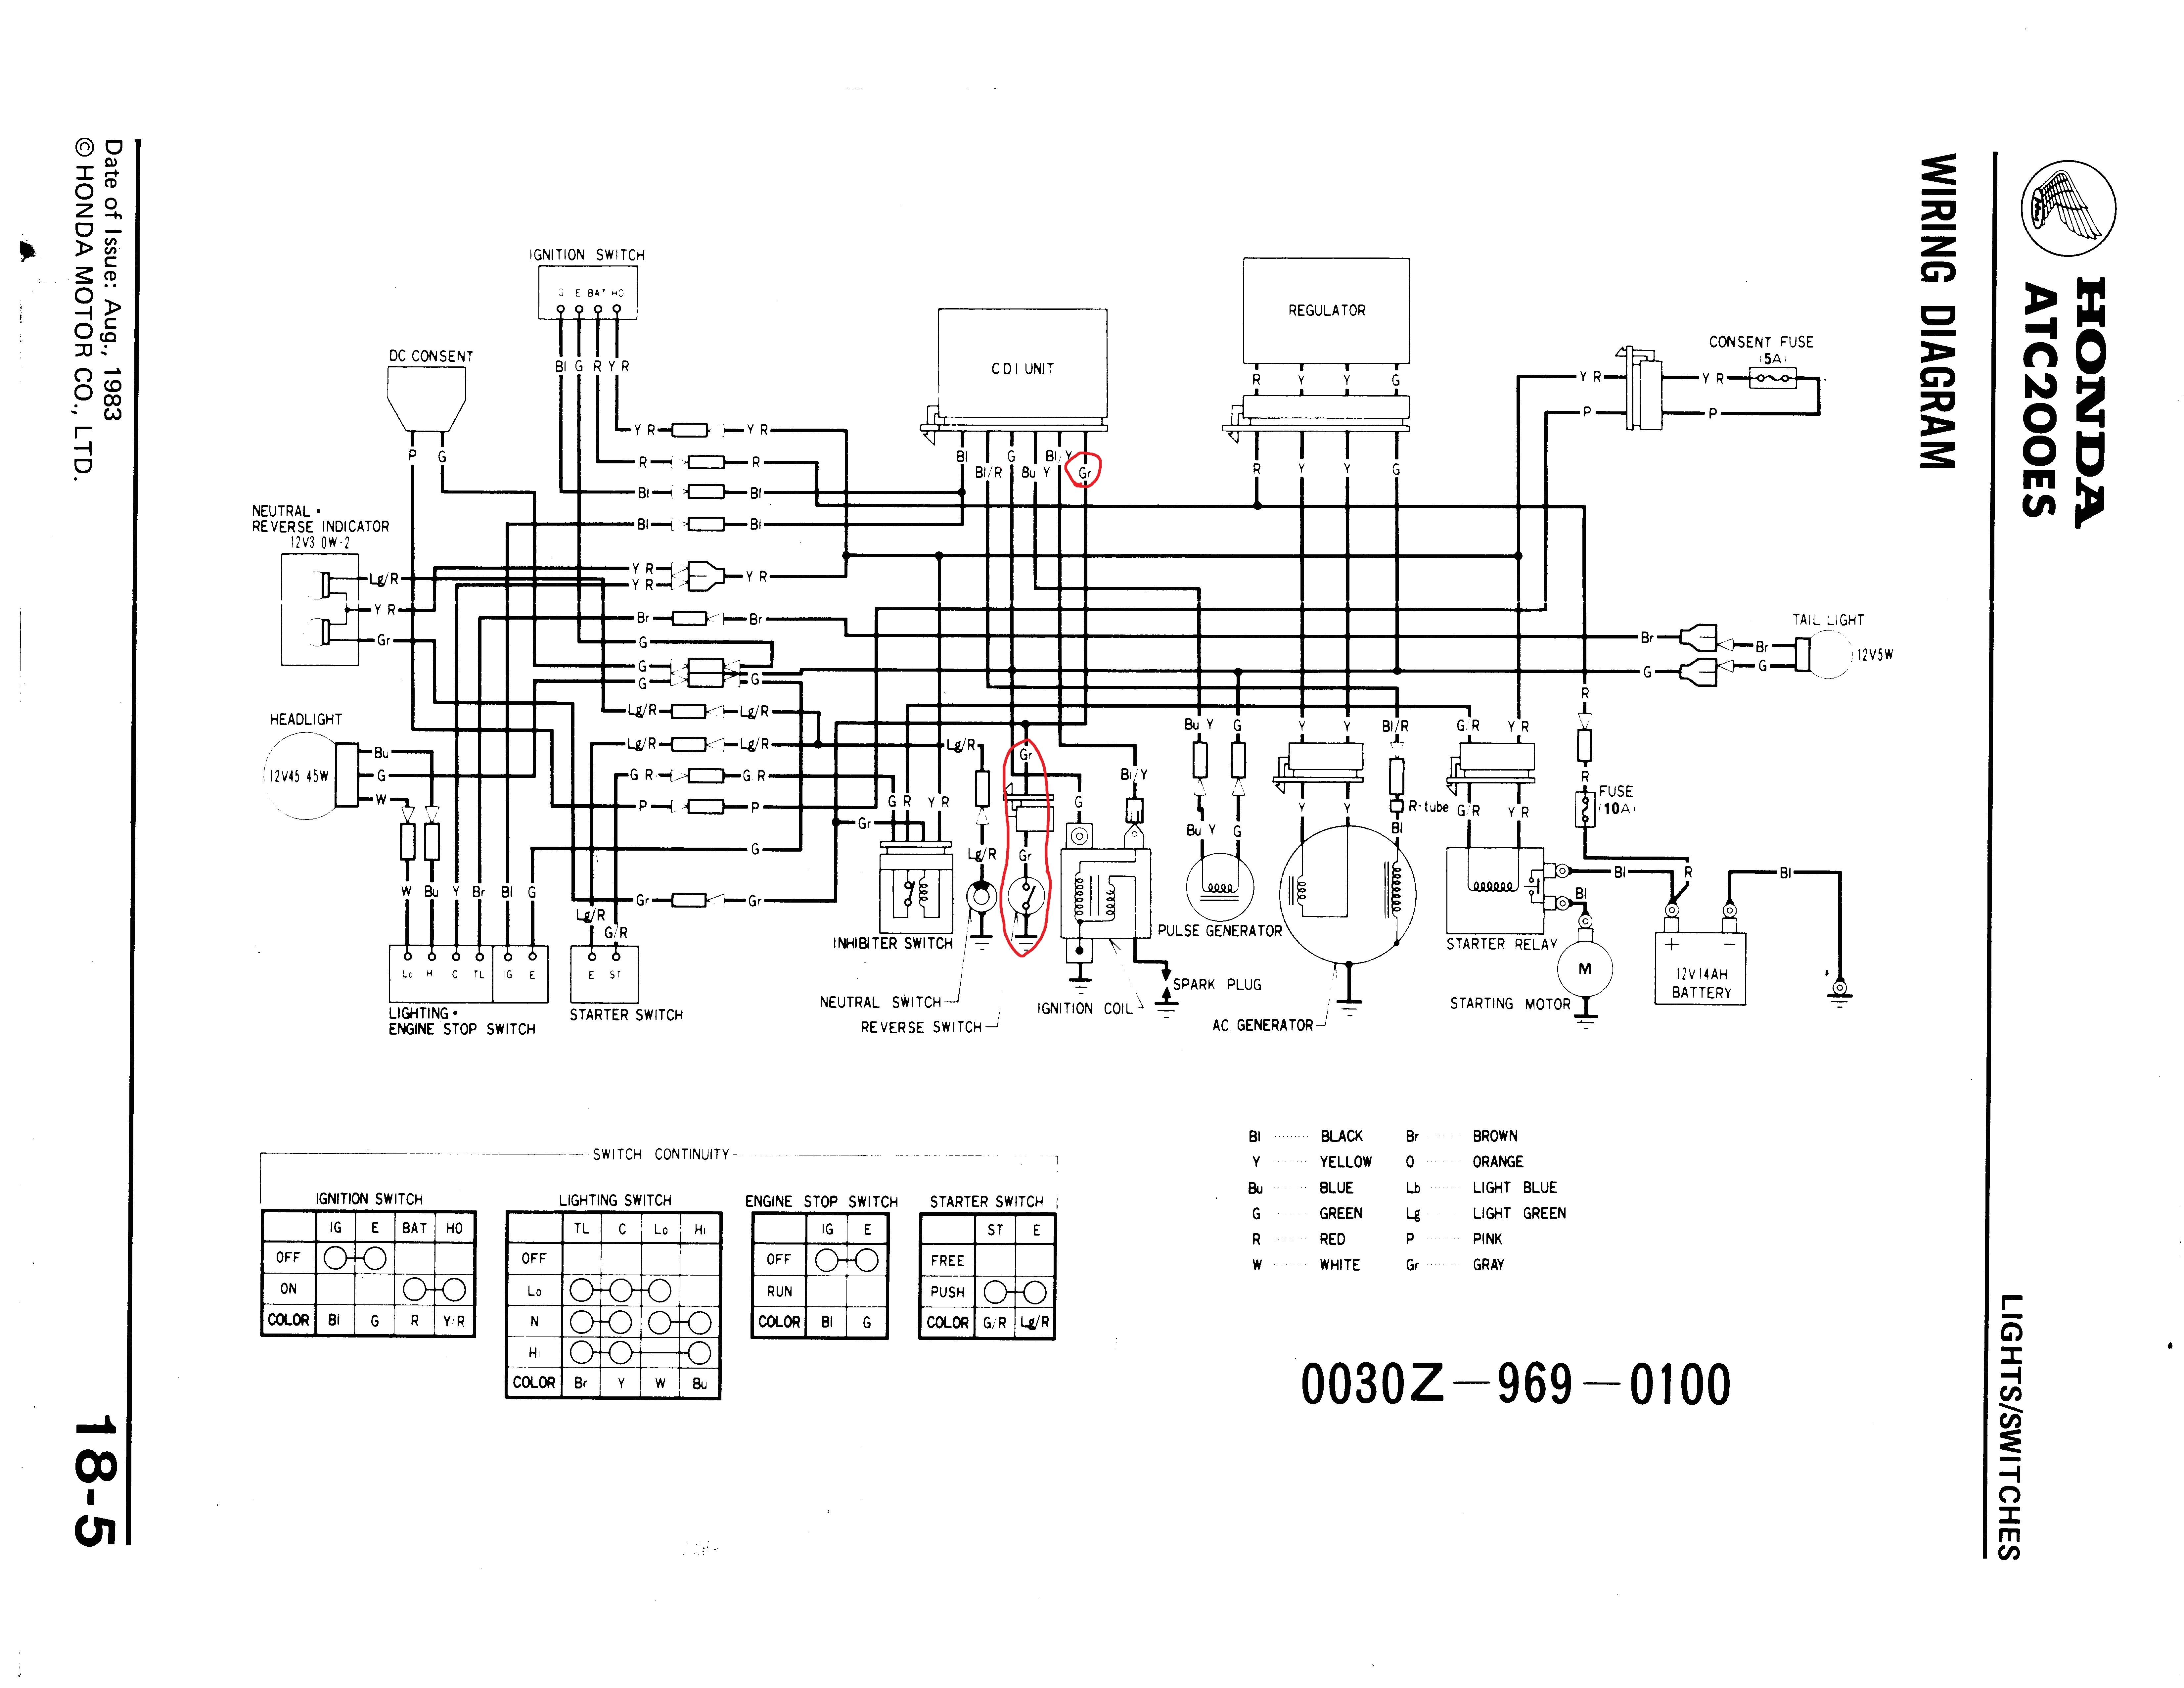 na50 wiring diagram wiring diagram mix 1997 honda wiring diagram wiring diagram database mix honda fourtrax